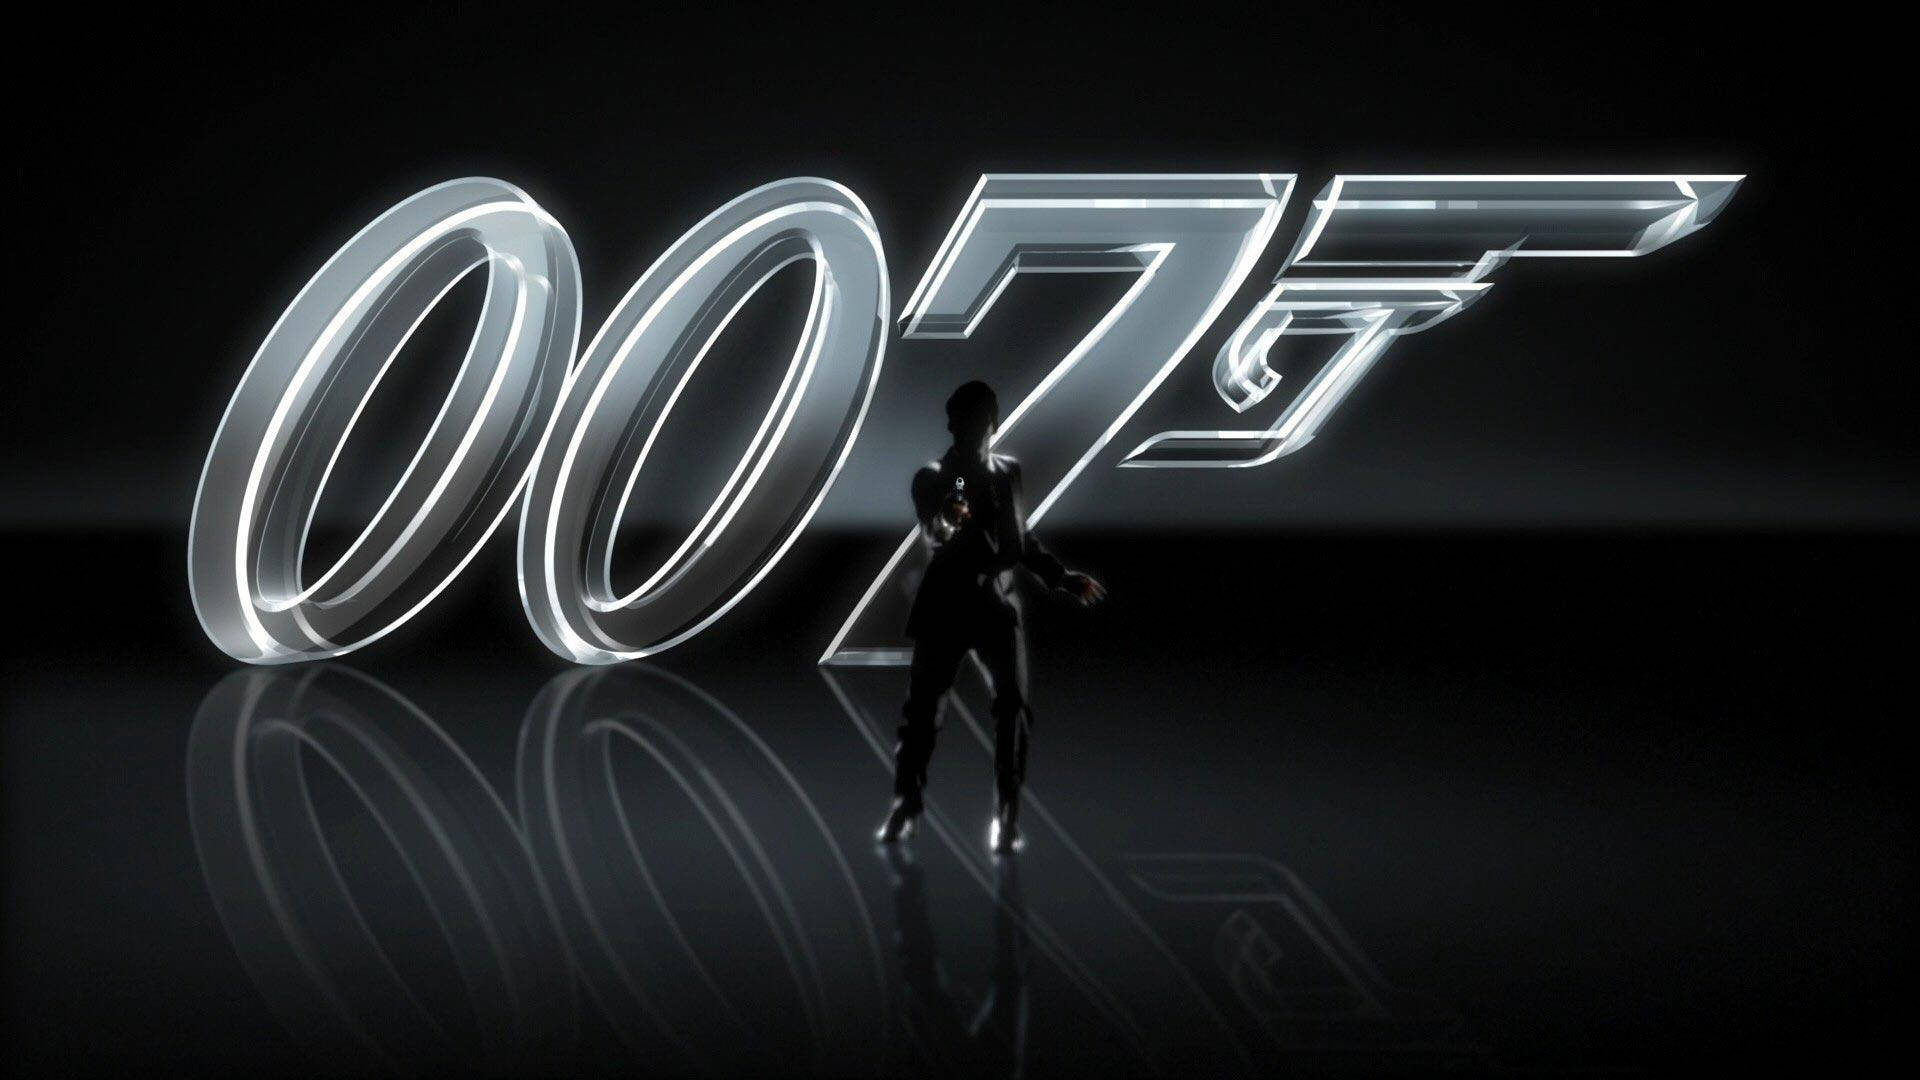 Jamesbond 007 Film: James Bond 007 Film Wallpaper